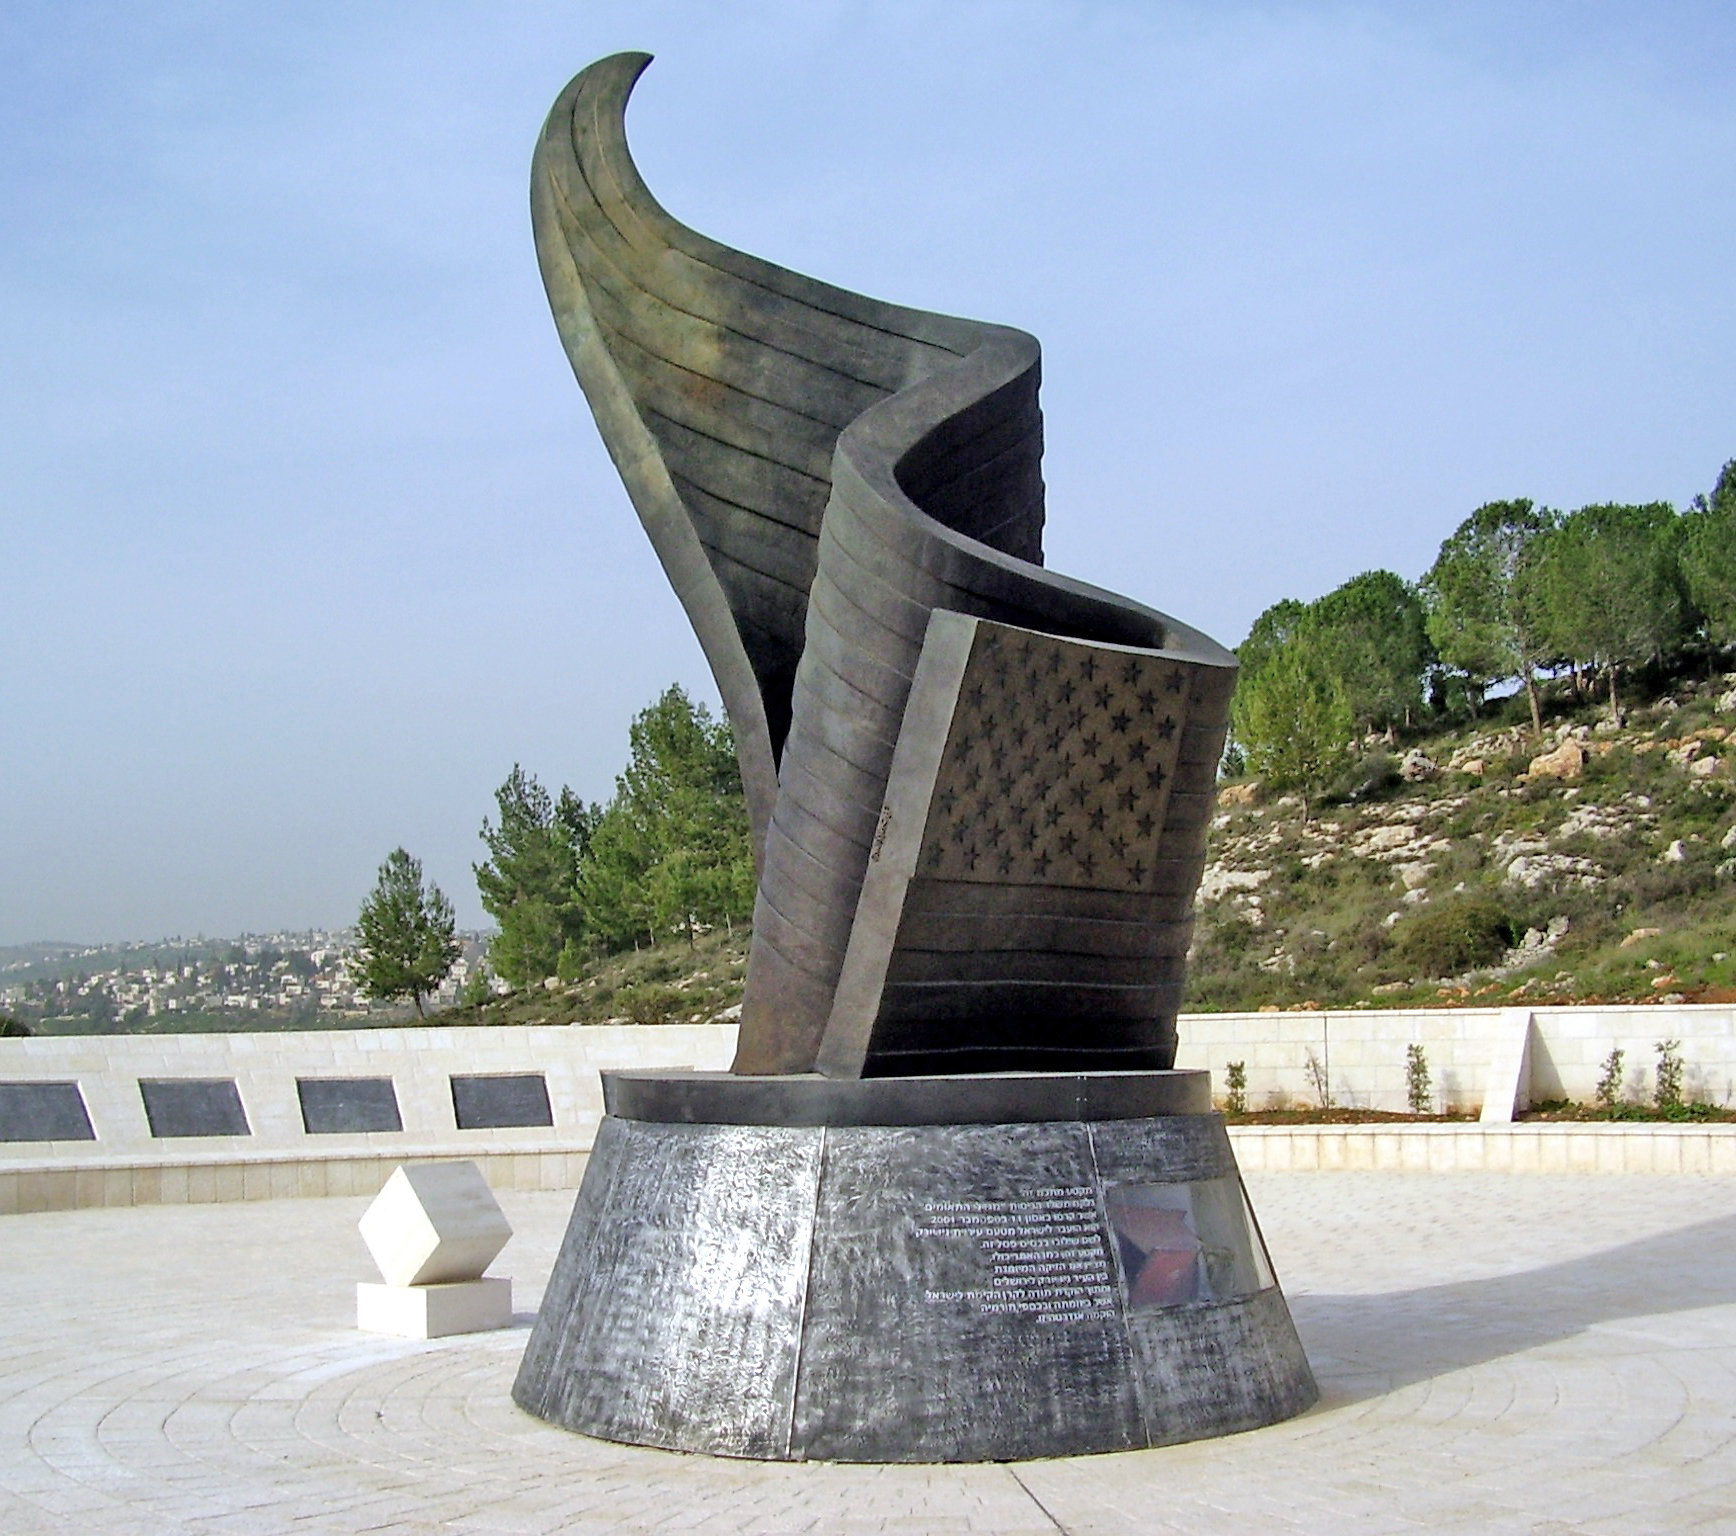 File:Twin Towers Memorial in Israel.jpg - Wikimedia Commons